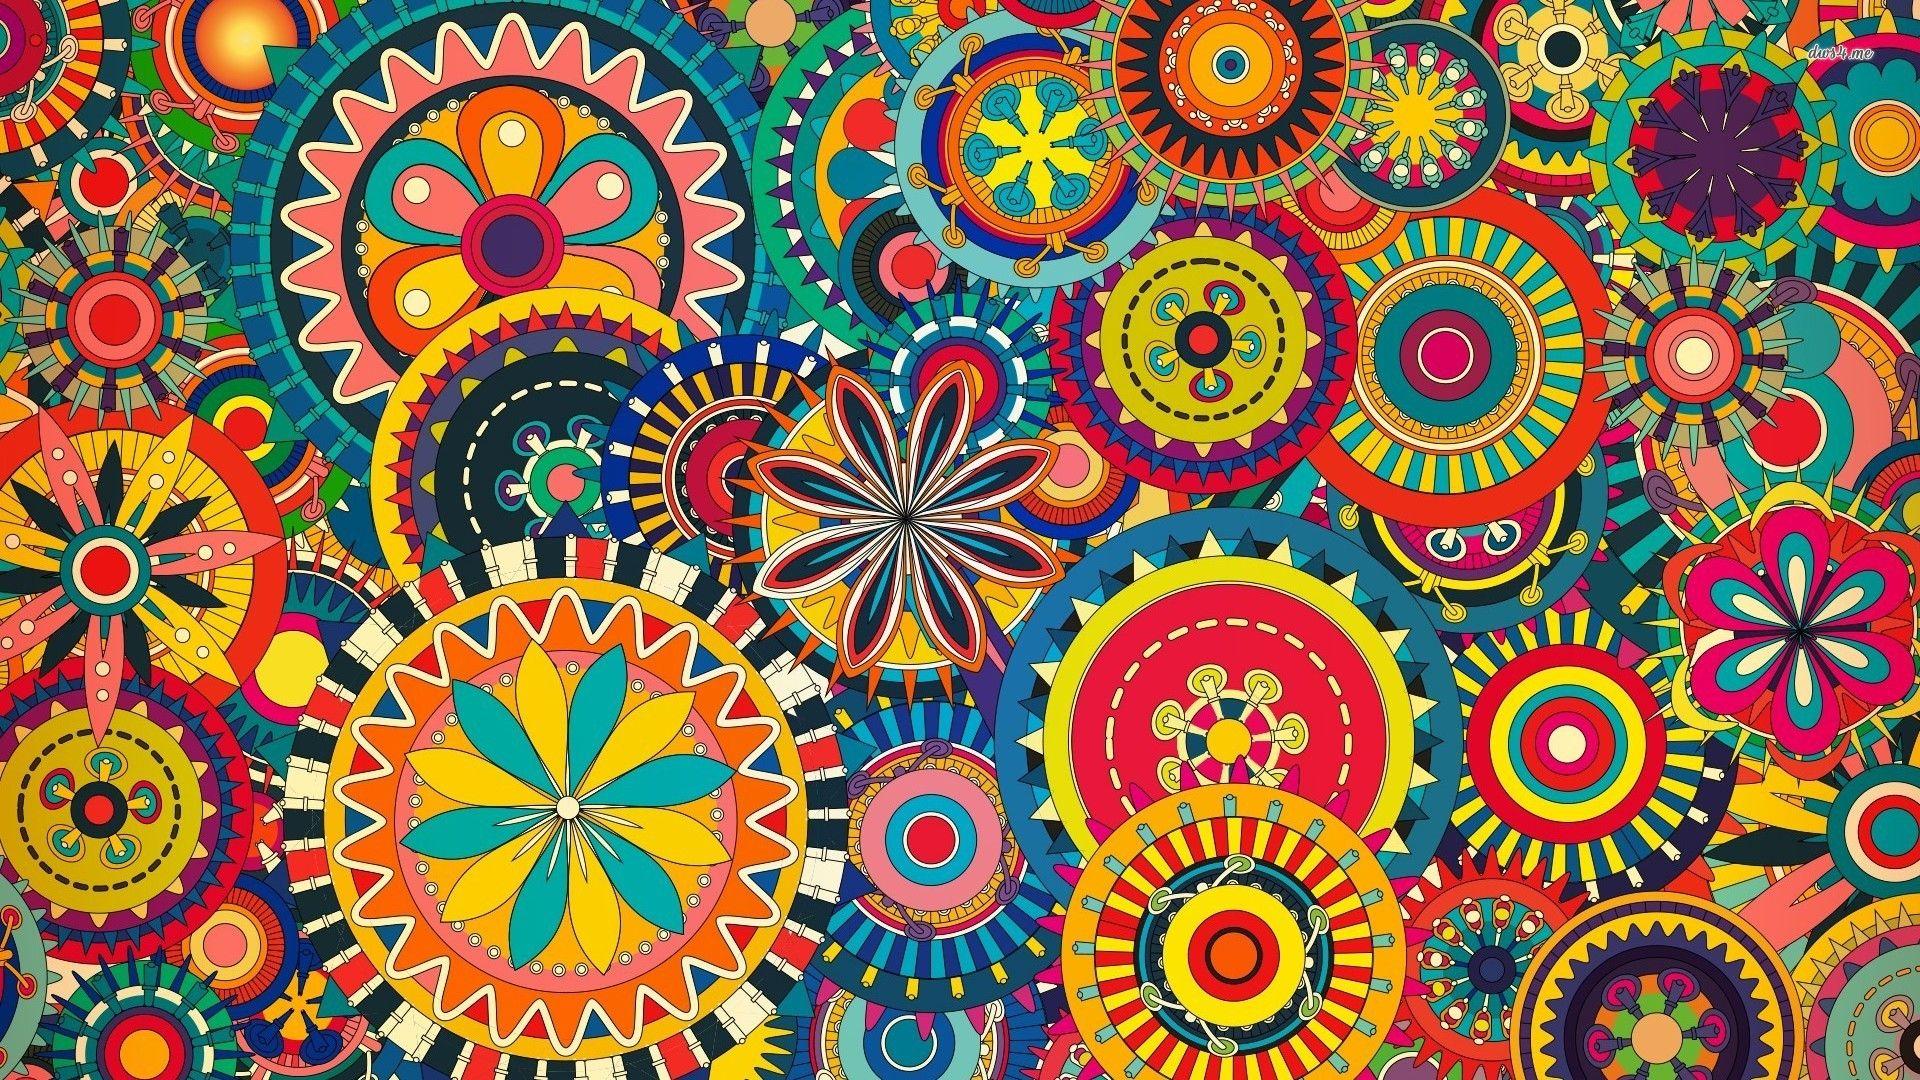 Colorful Patterns Design Inspiration 27631 Decorating Ideas. Tiles